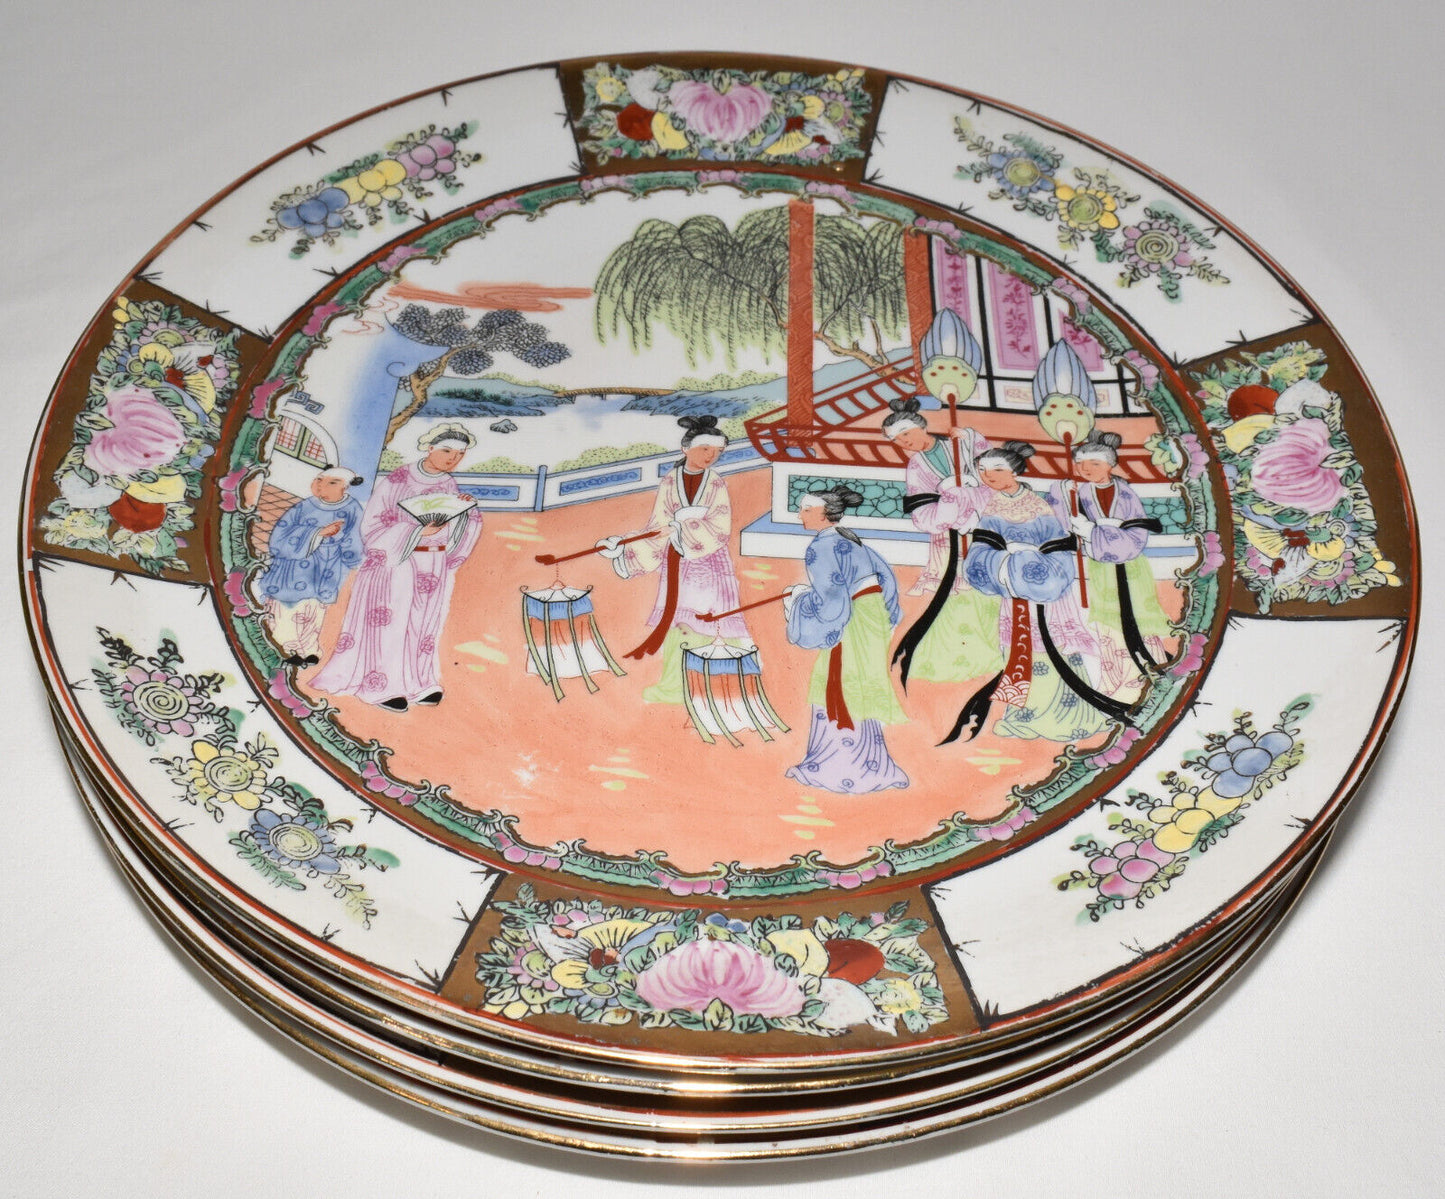 Vintage 20th Century Chinese Rose Mandarin 12" Plates Set of 4 Hand Painted Plates